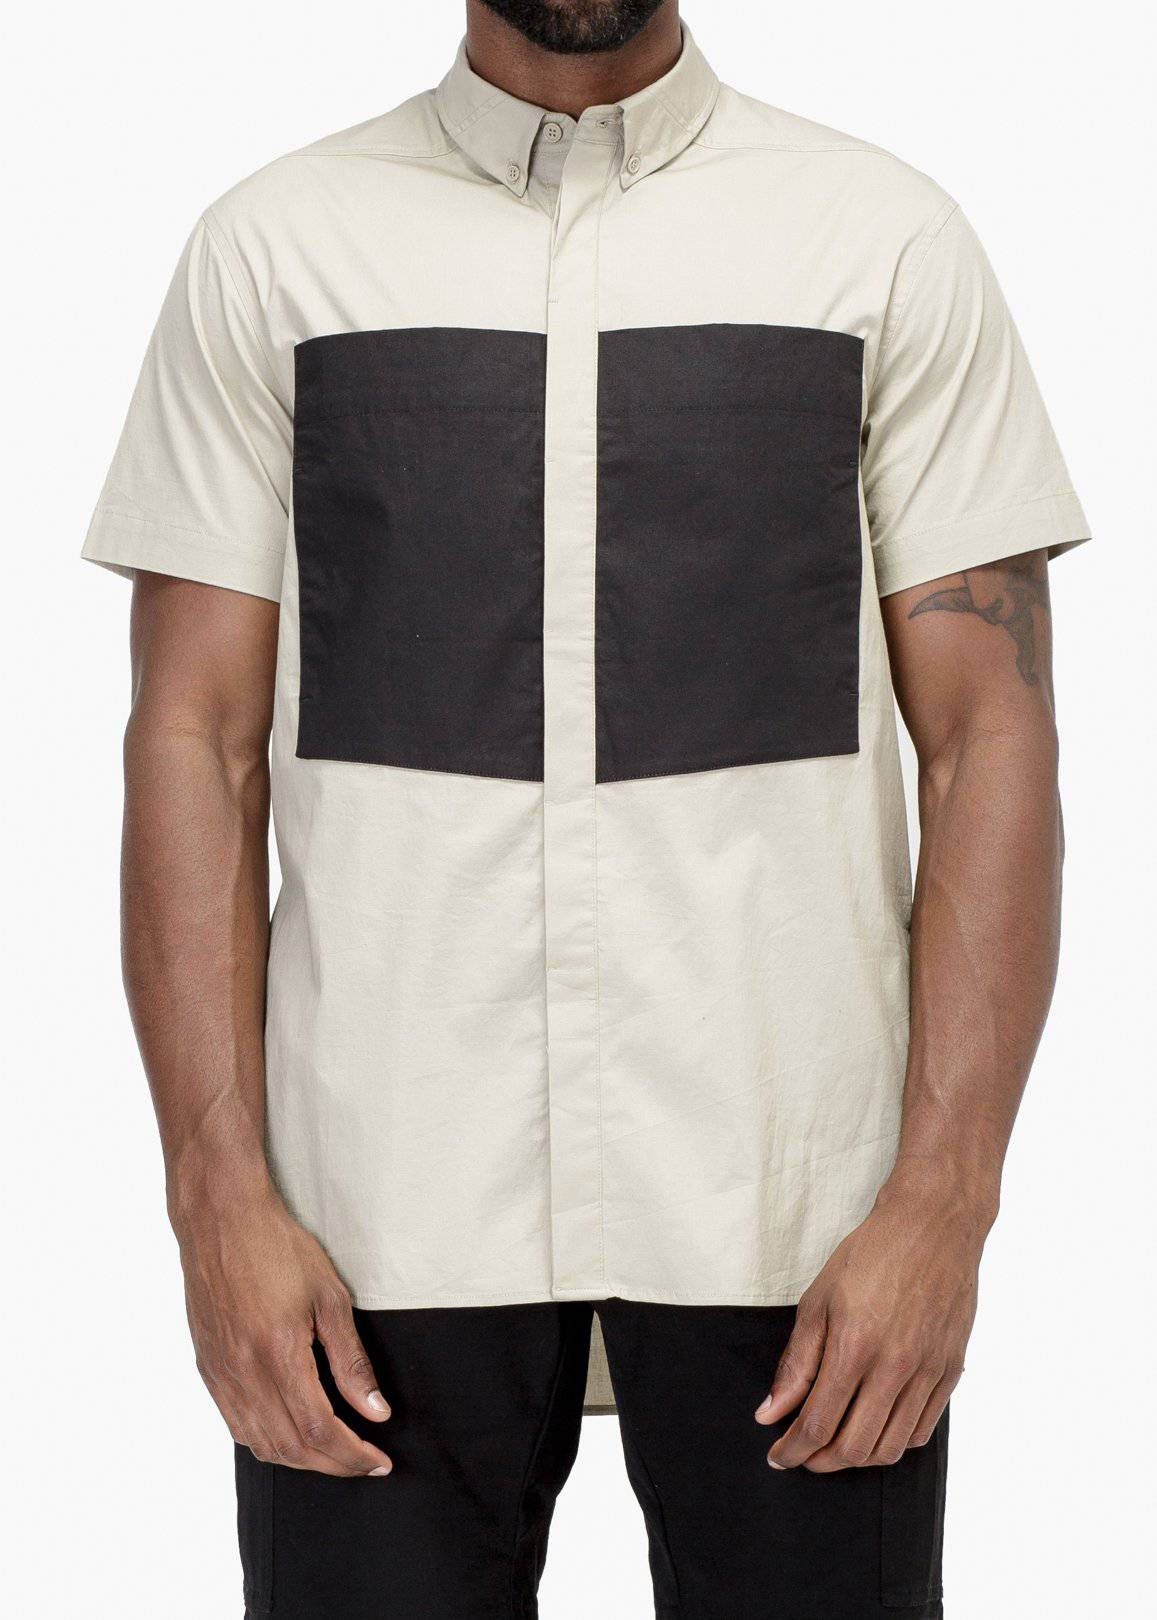 Konus Men's Short Sleeve Button Up in Khaki by Shop at Konus